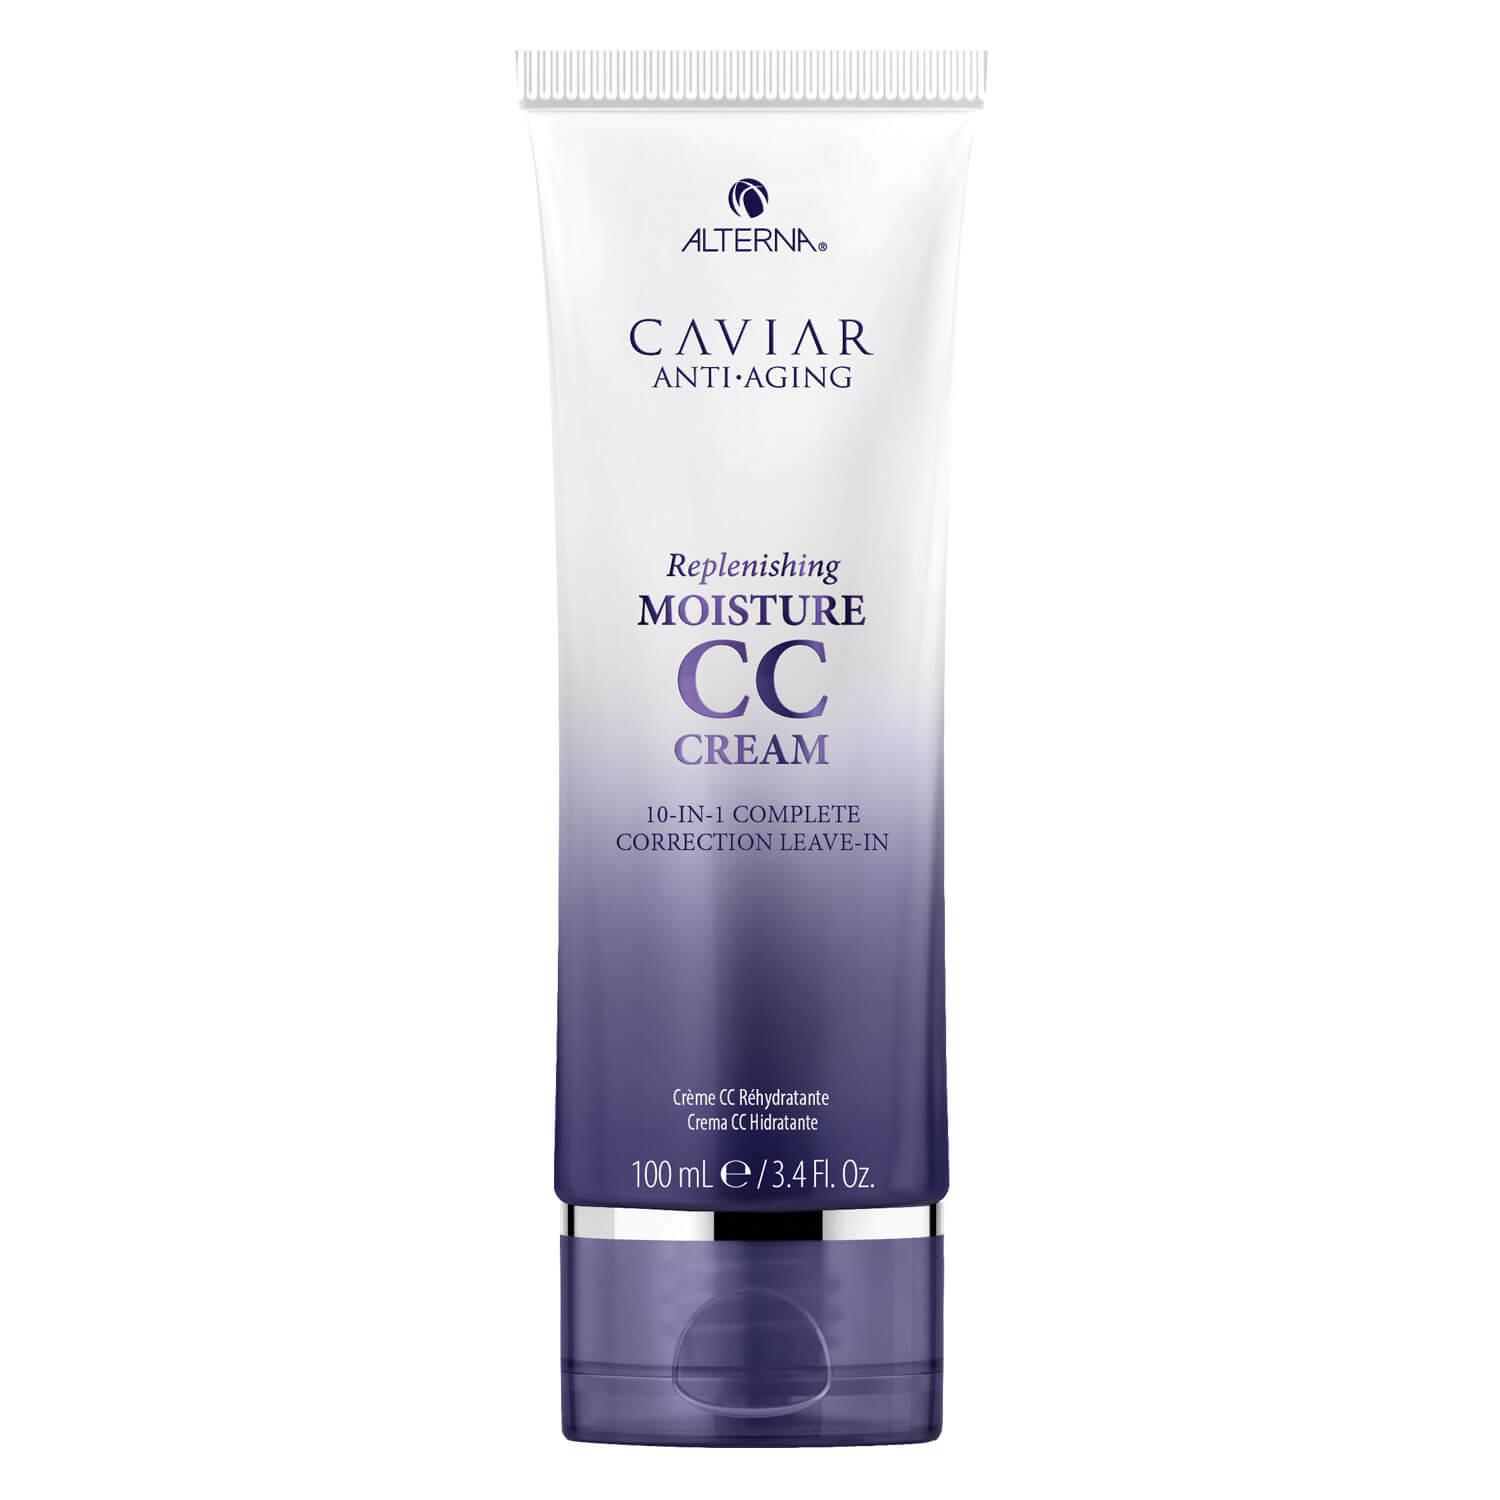 Caviar Anti Aging - Replenishing Moisture CC Cream